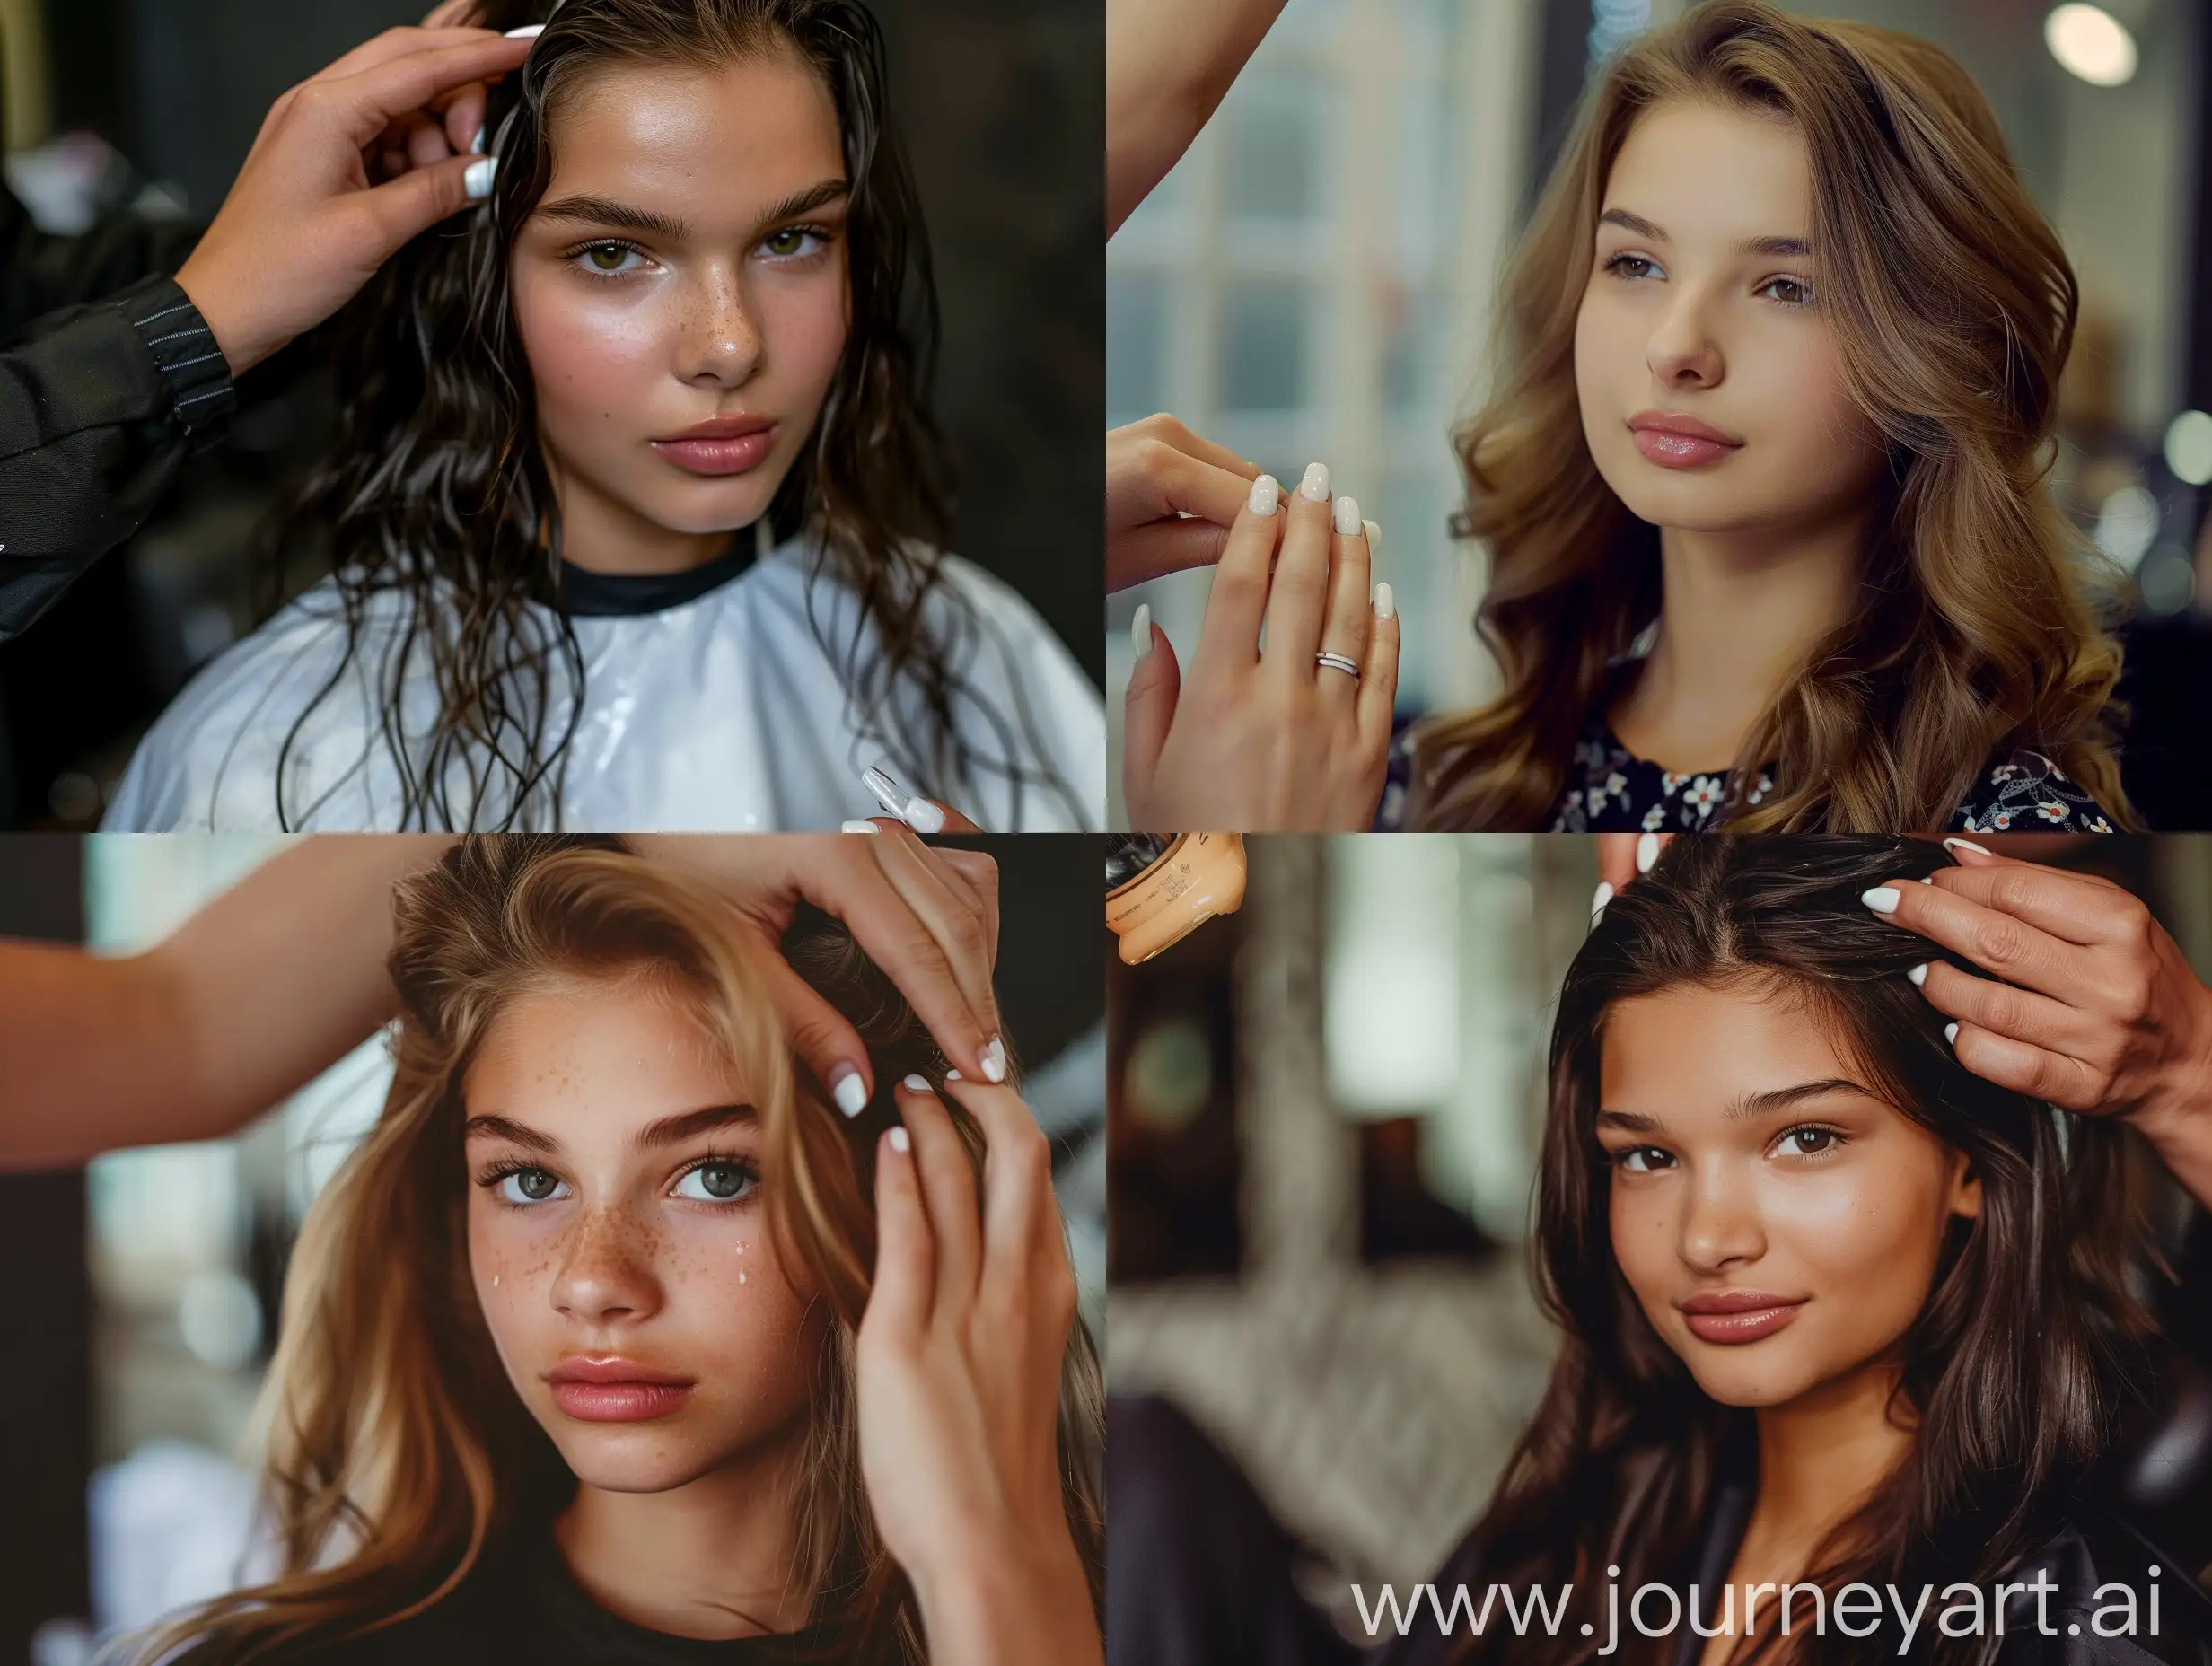 Stylish-Teenage-Model-Receives-Hair-Treatment-at-Salon-with-Elegant-Gel-Nail-Polish